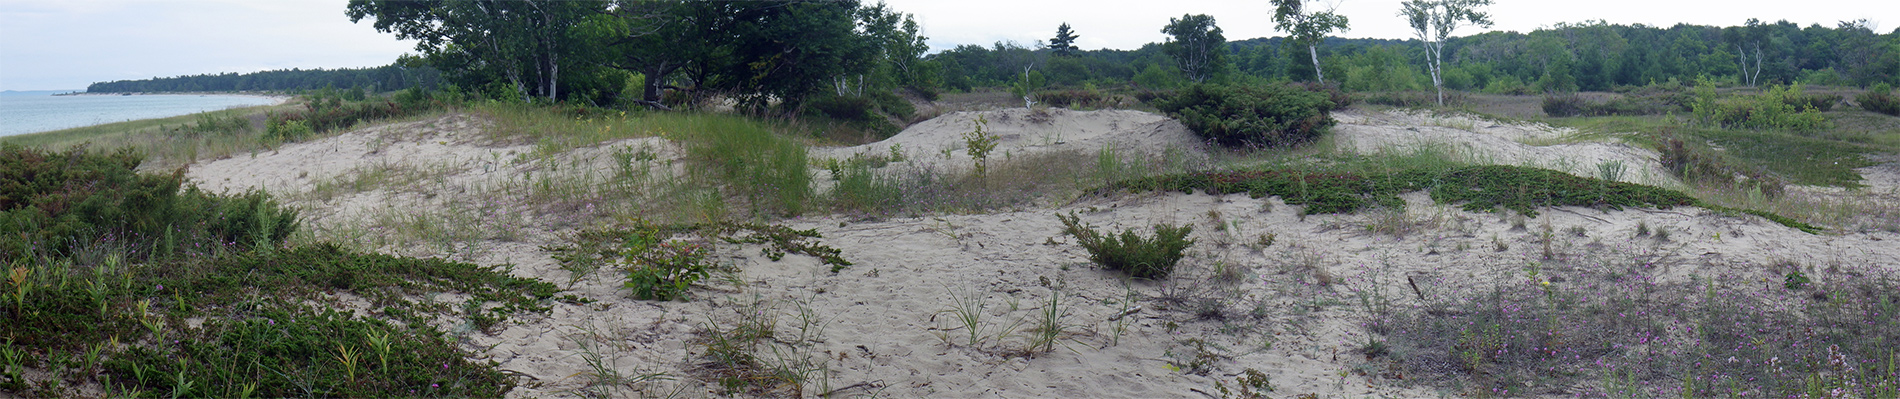 Small dune field near the cemetary.